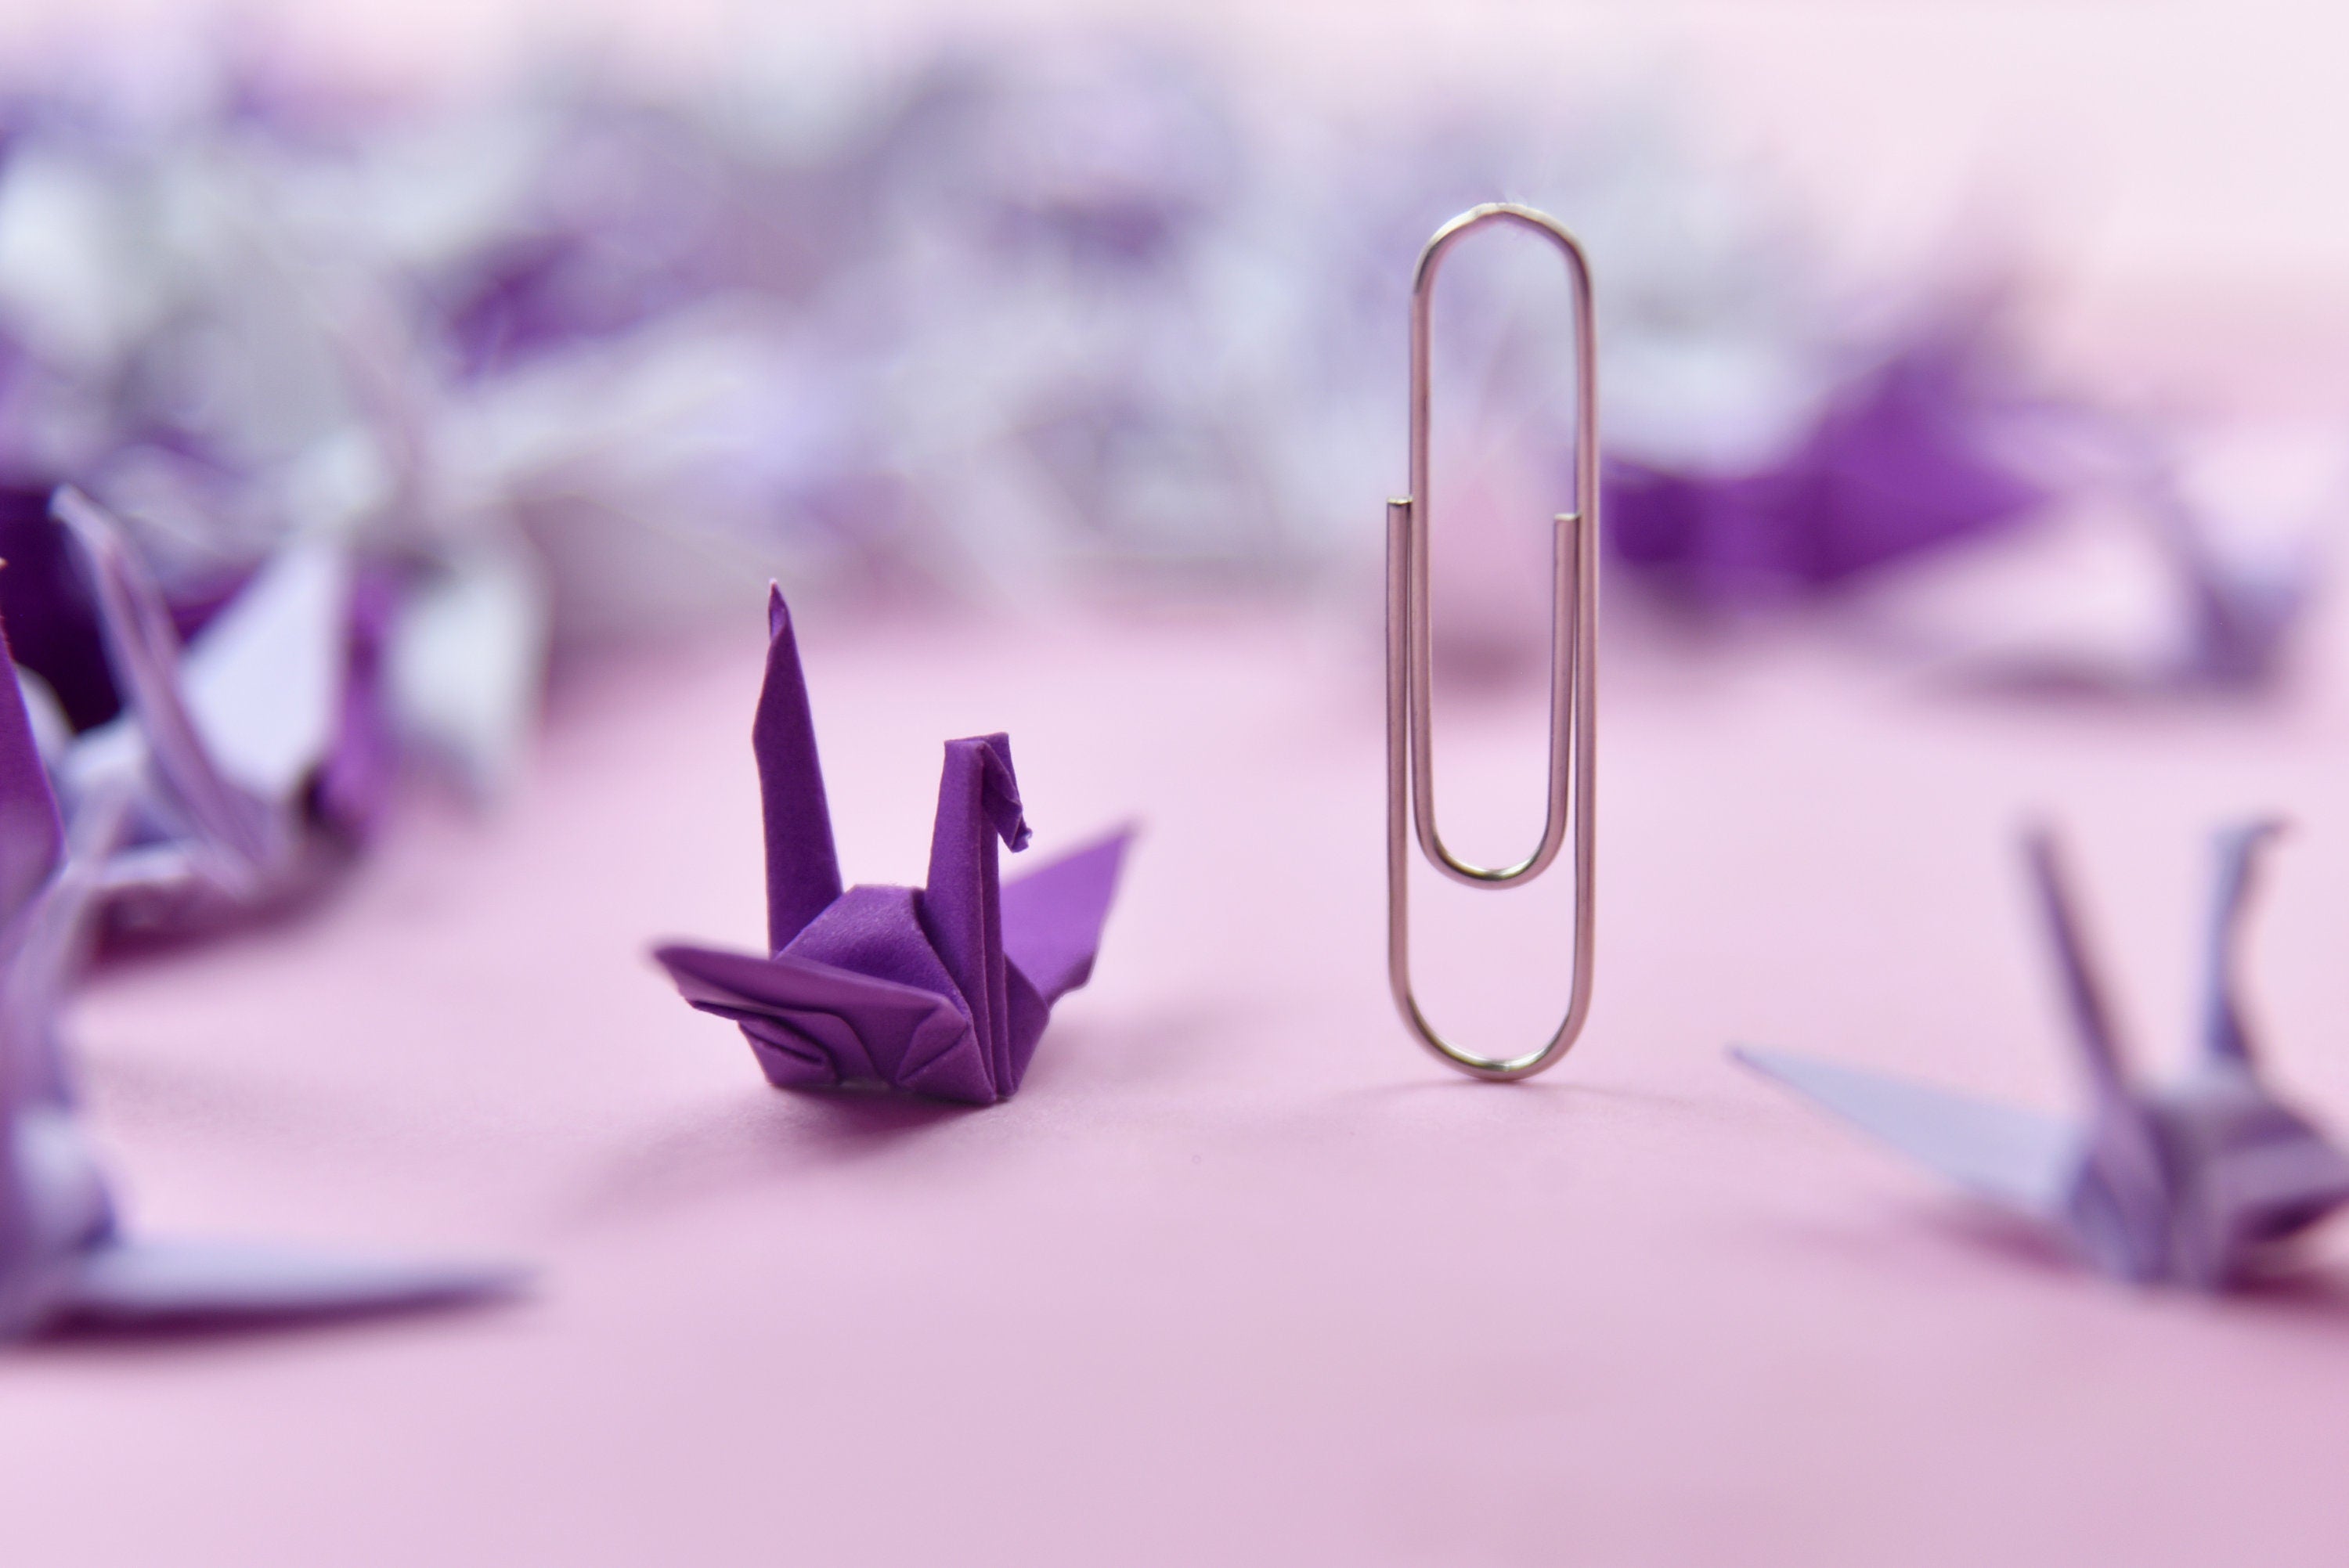 1000 Origami Paper Purple Shade Cranes Pre Made Small 1.5x1.5 inches for Wedding Decor, Anniversary Gift, Valentine